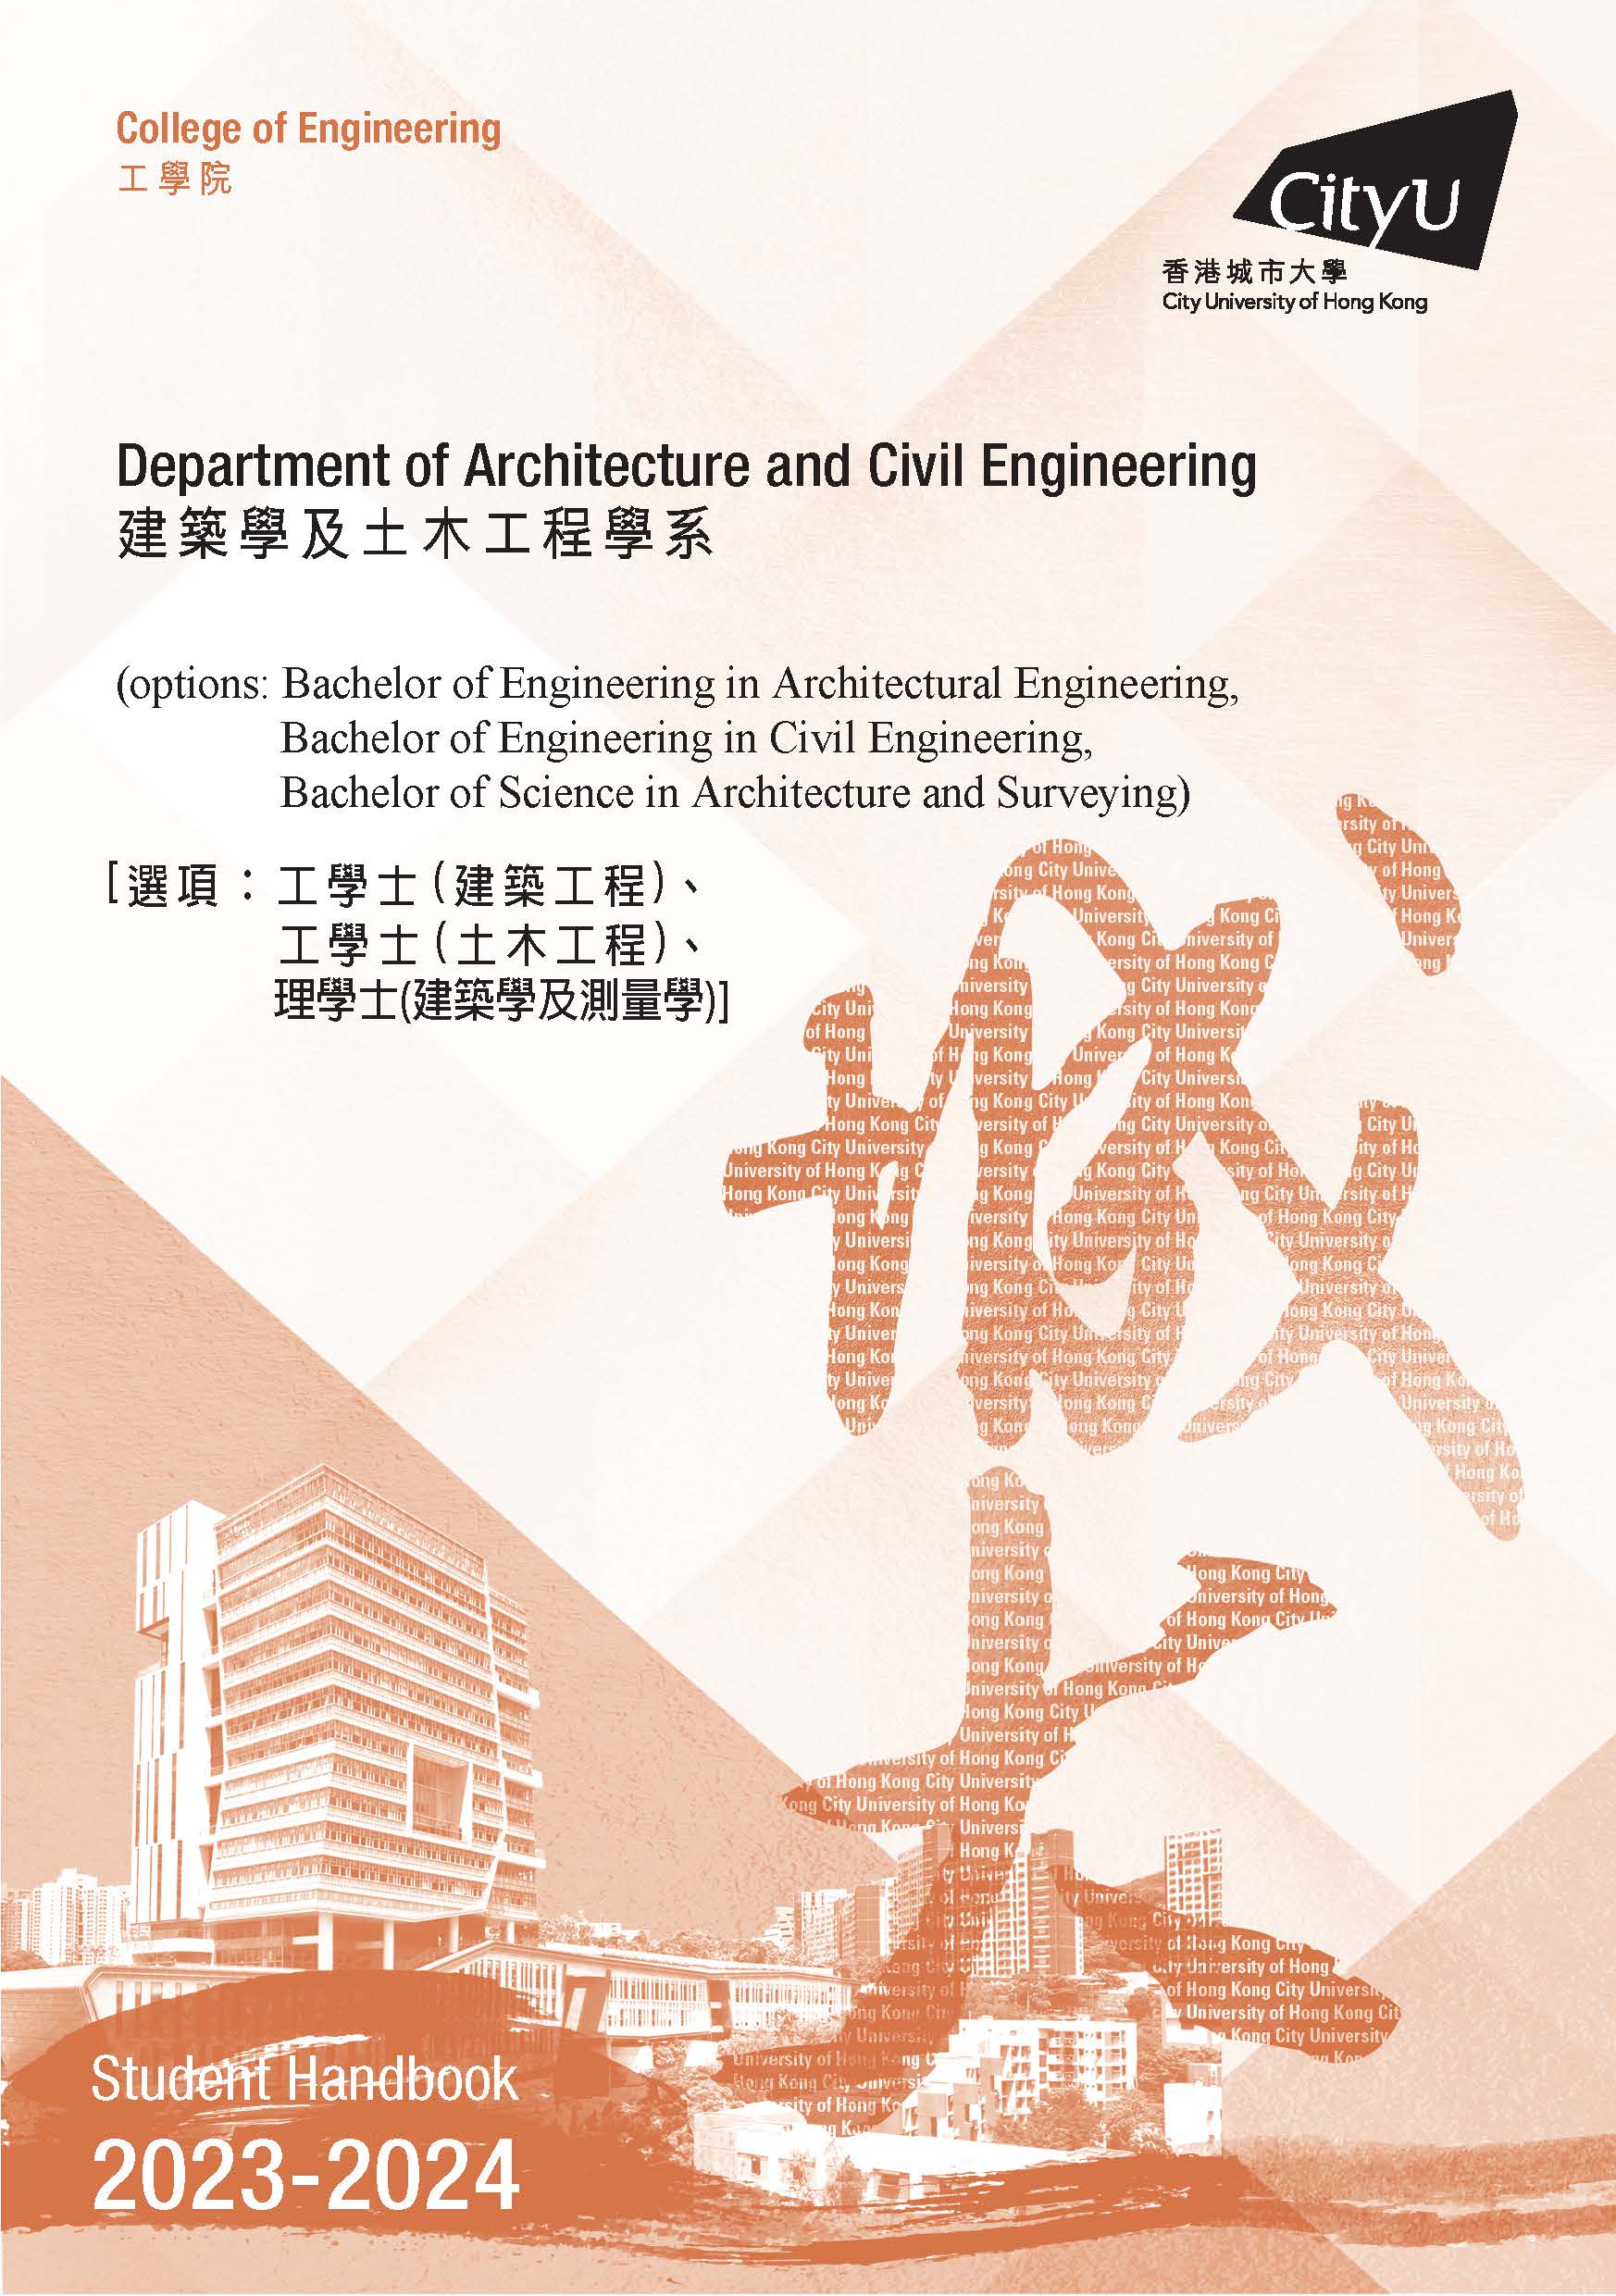 Student Handbook 2023/2024 (Bachelor of Engineering/Bachelor of Science)